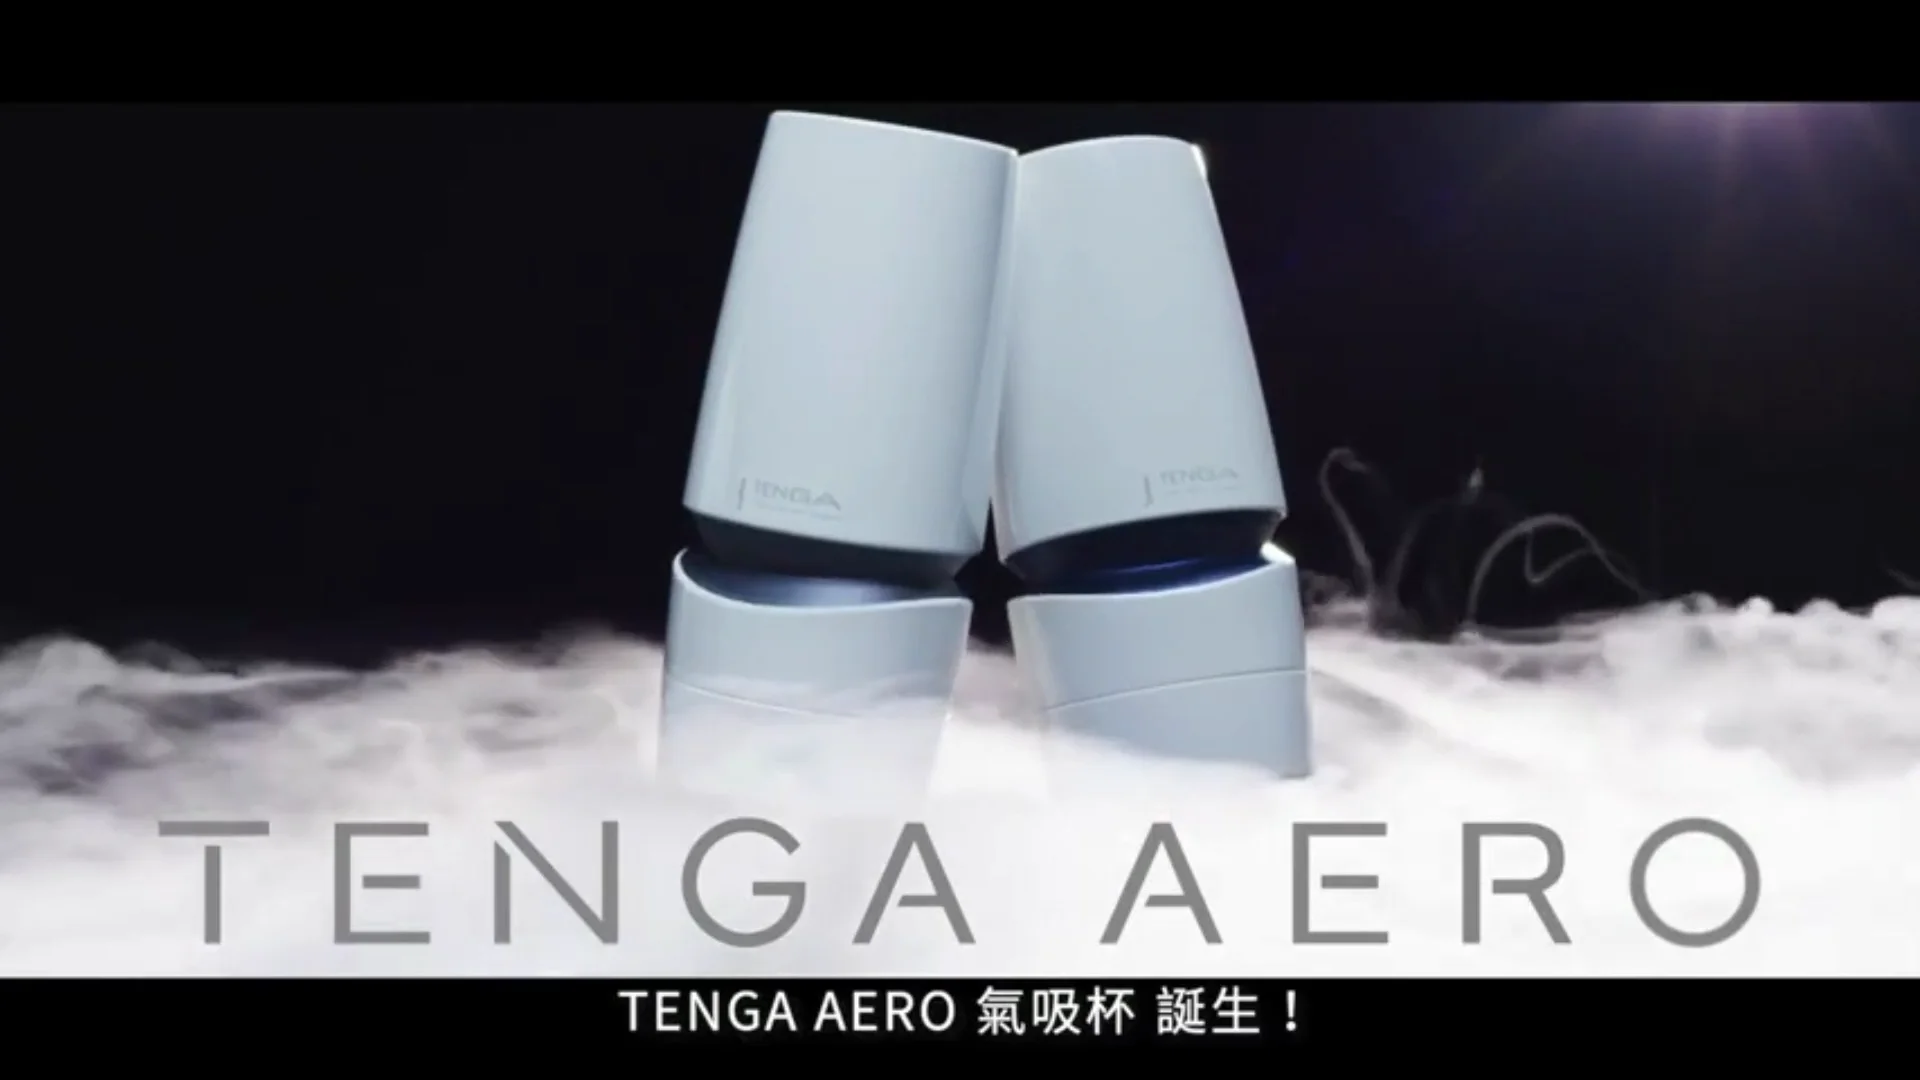 TENGA SPINNER on Vimeo